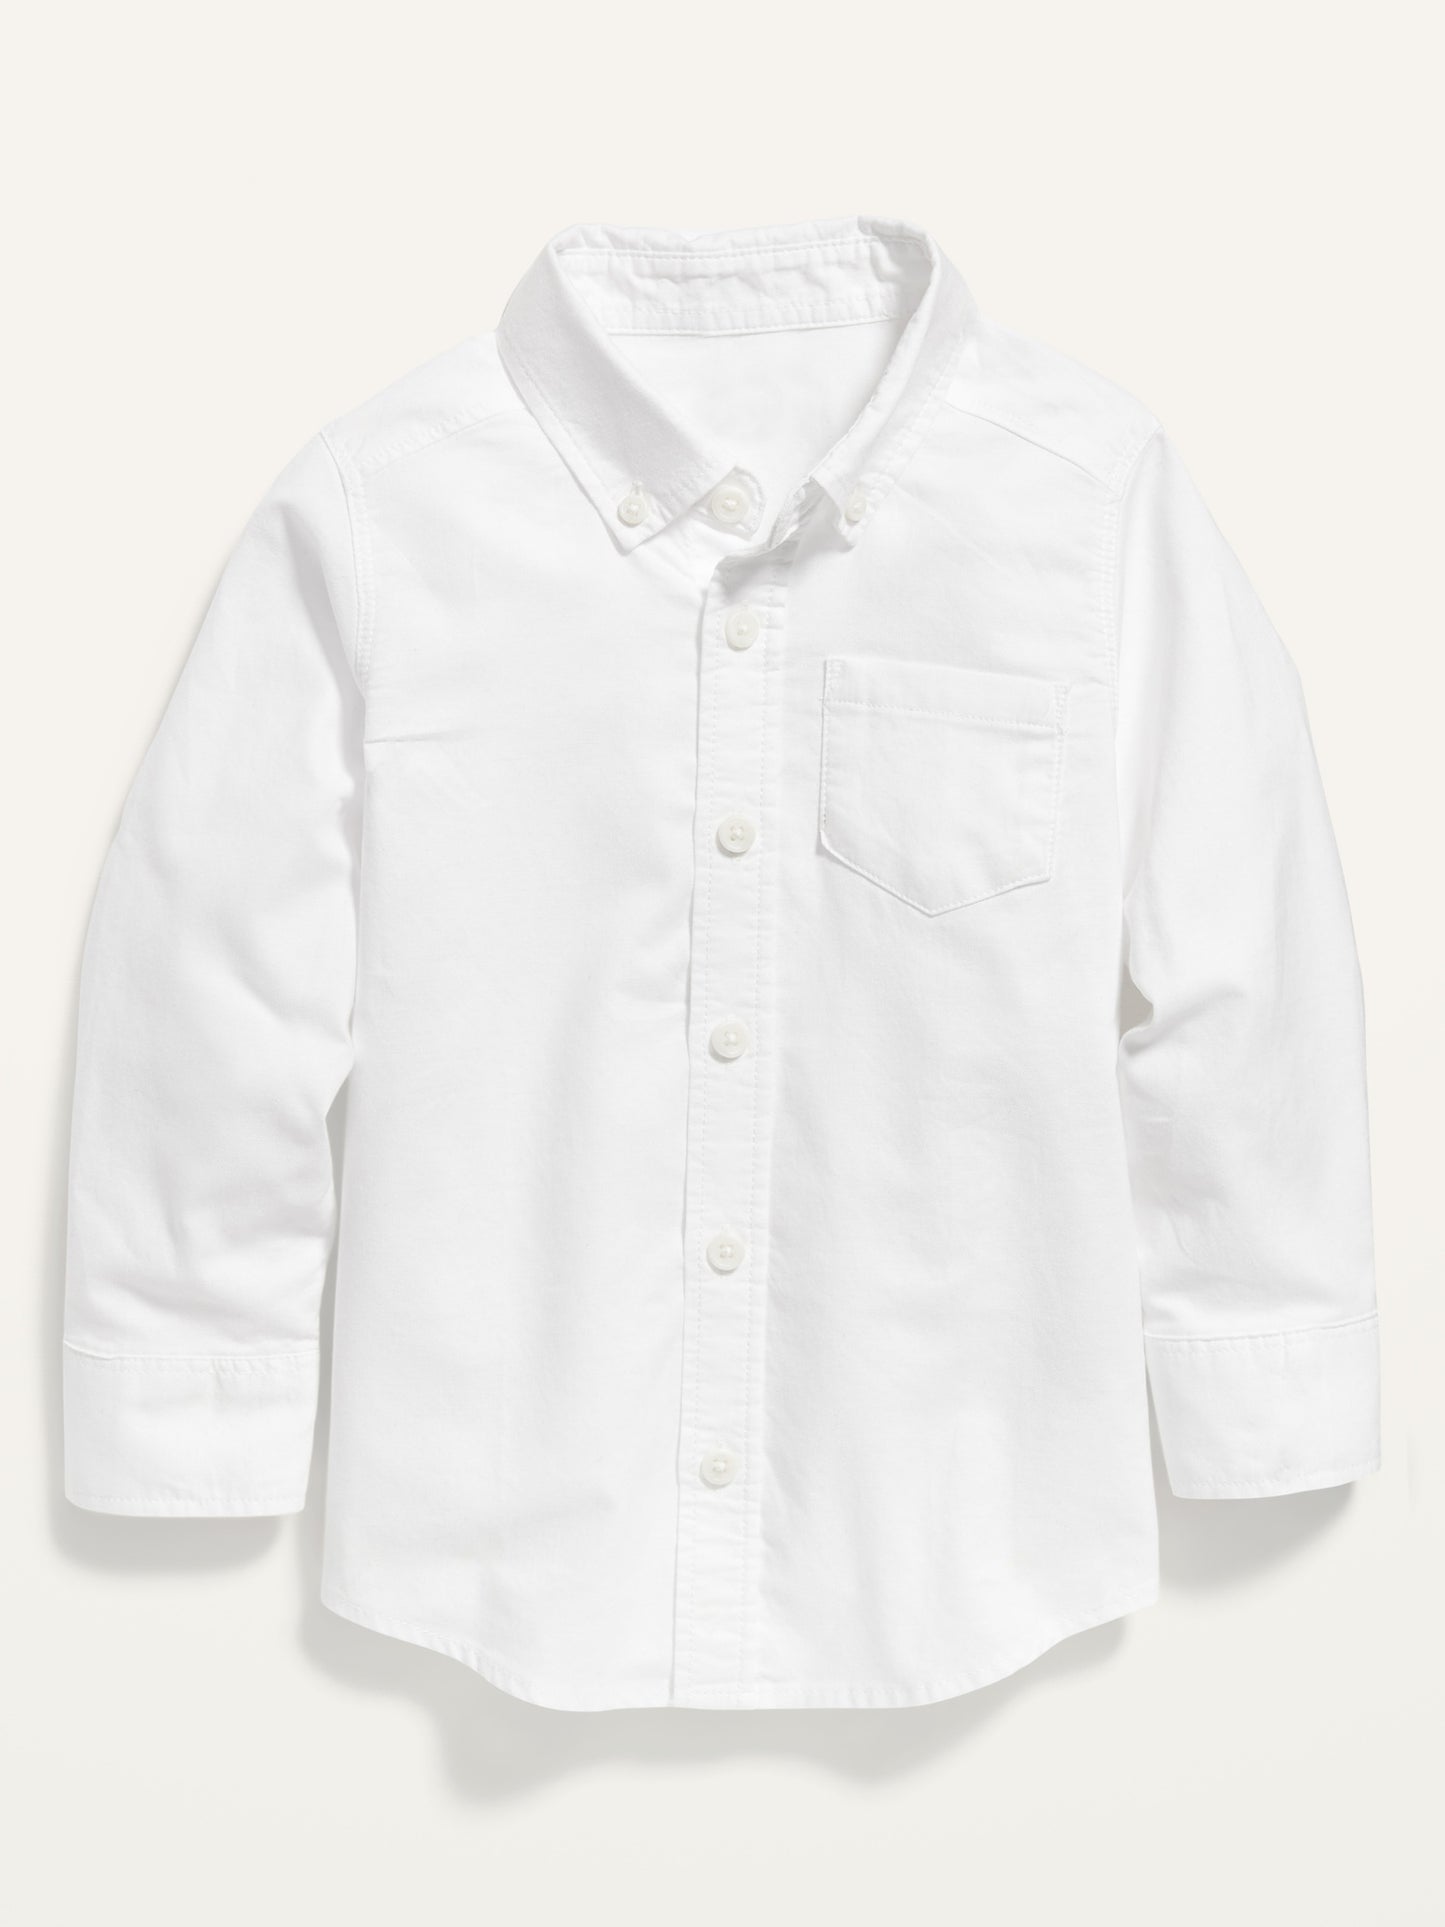 ON Camisa Oxford de manga larga para niños pequeños - Blanco brillante